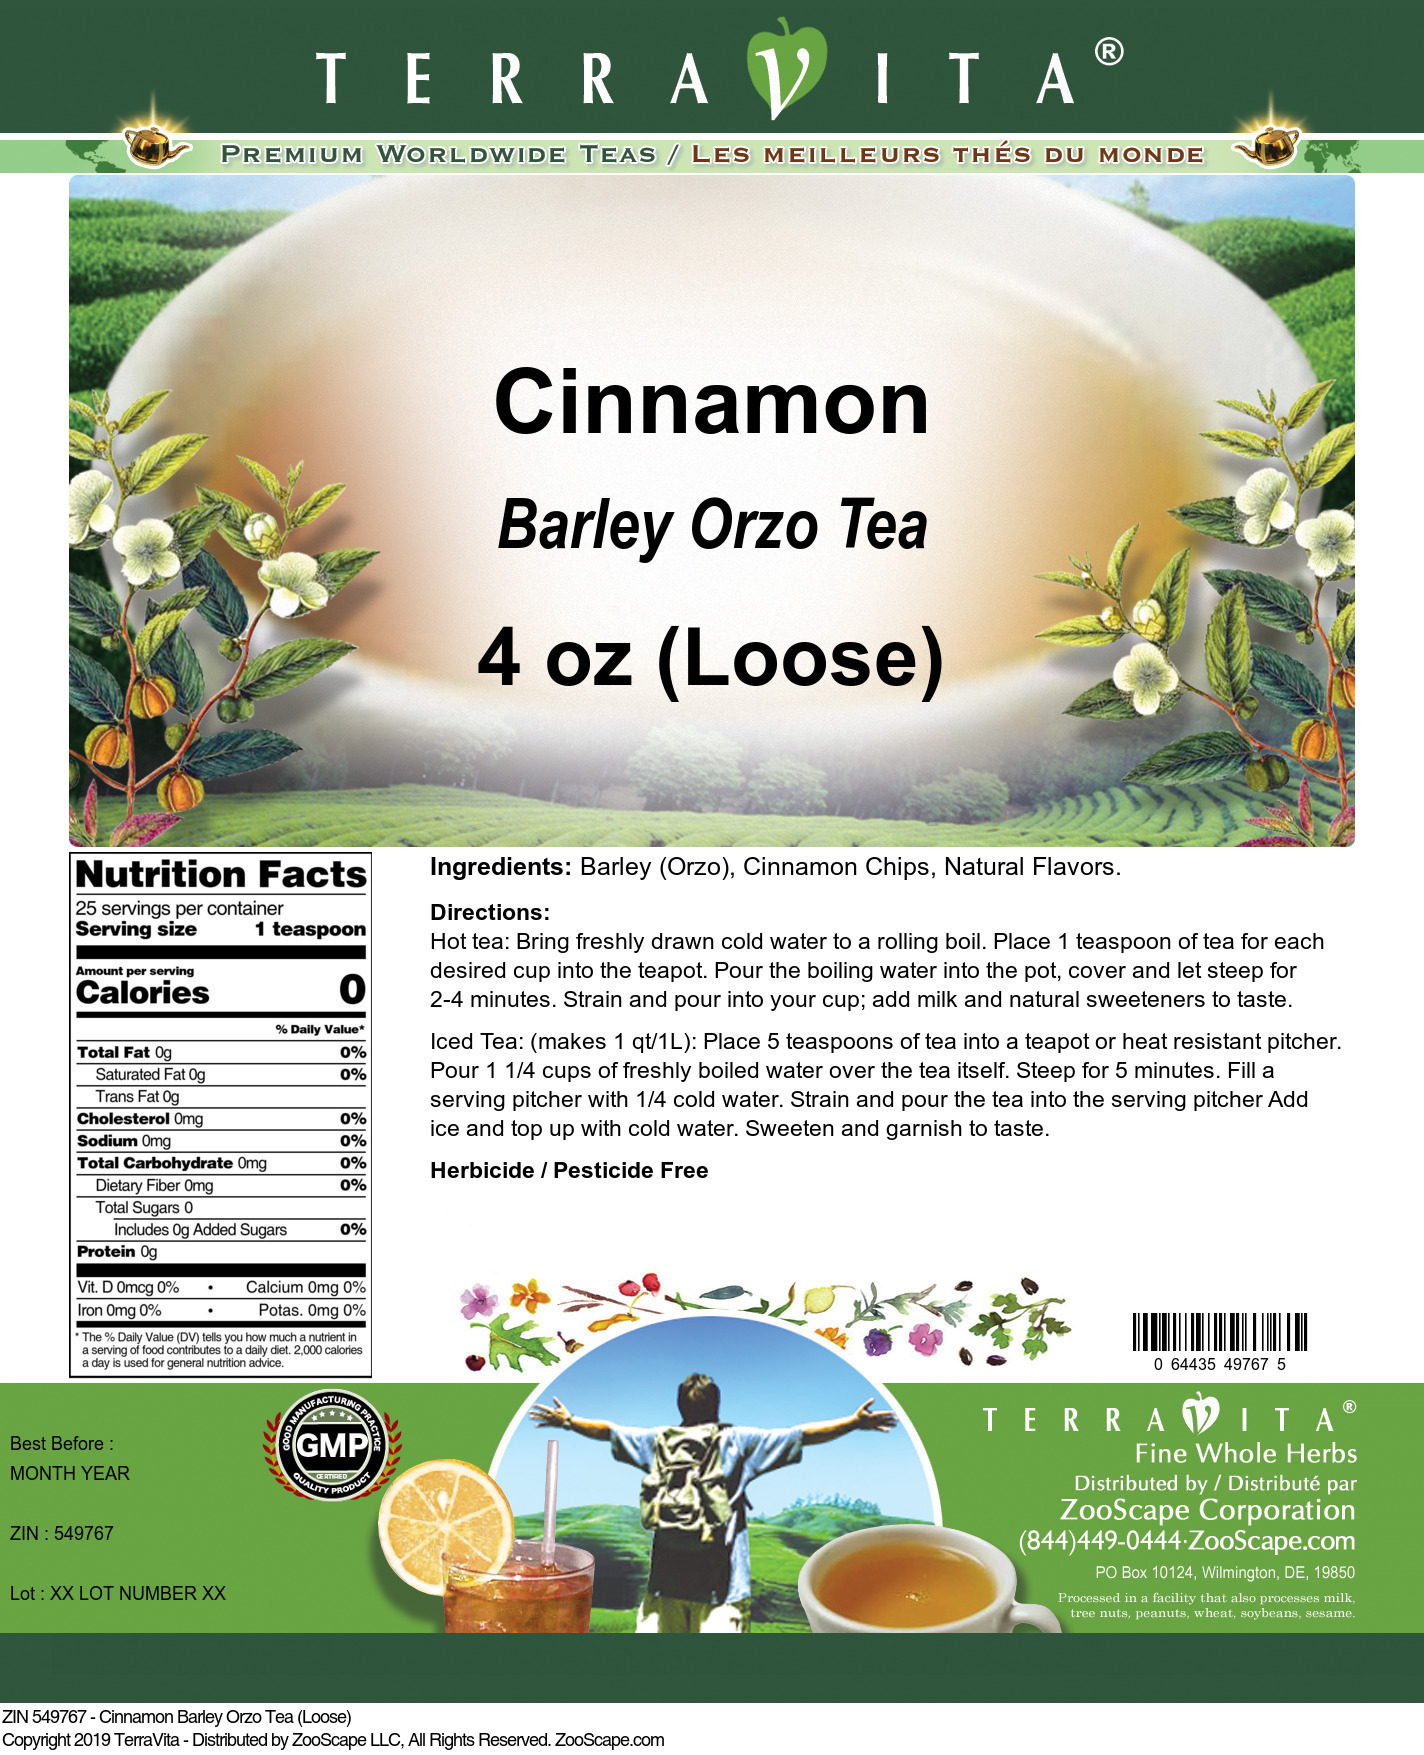 Cinnamon Barley Orzo Tea (Loose) - Label